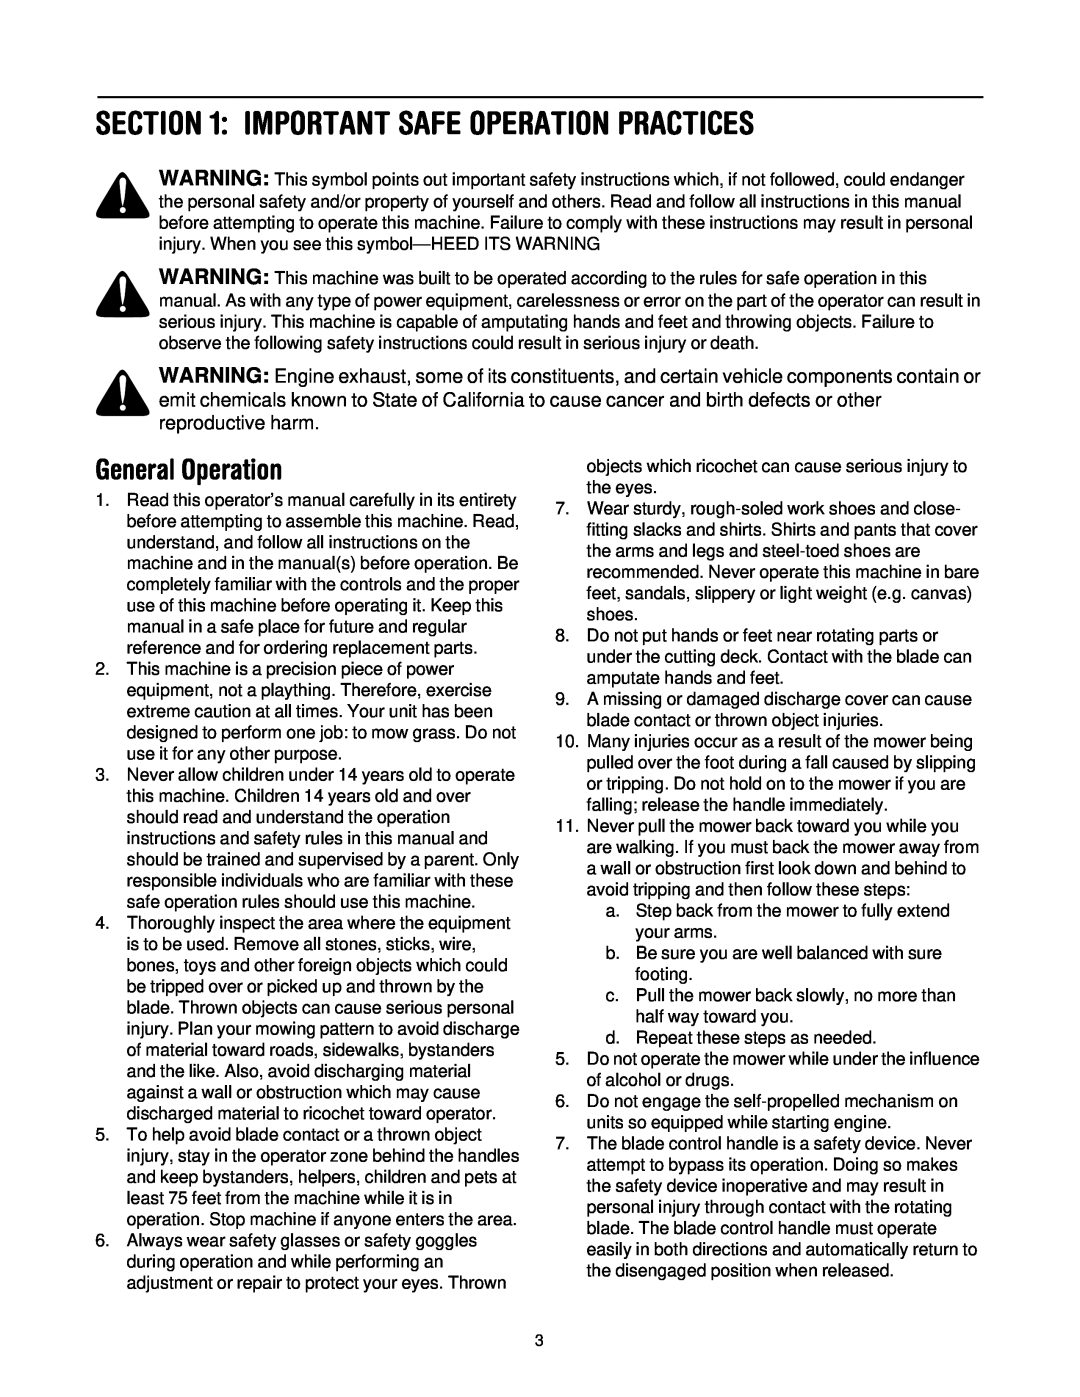 Troy-Bilt 436 manual Important Safe Operation Practices, General Operation 